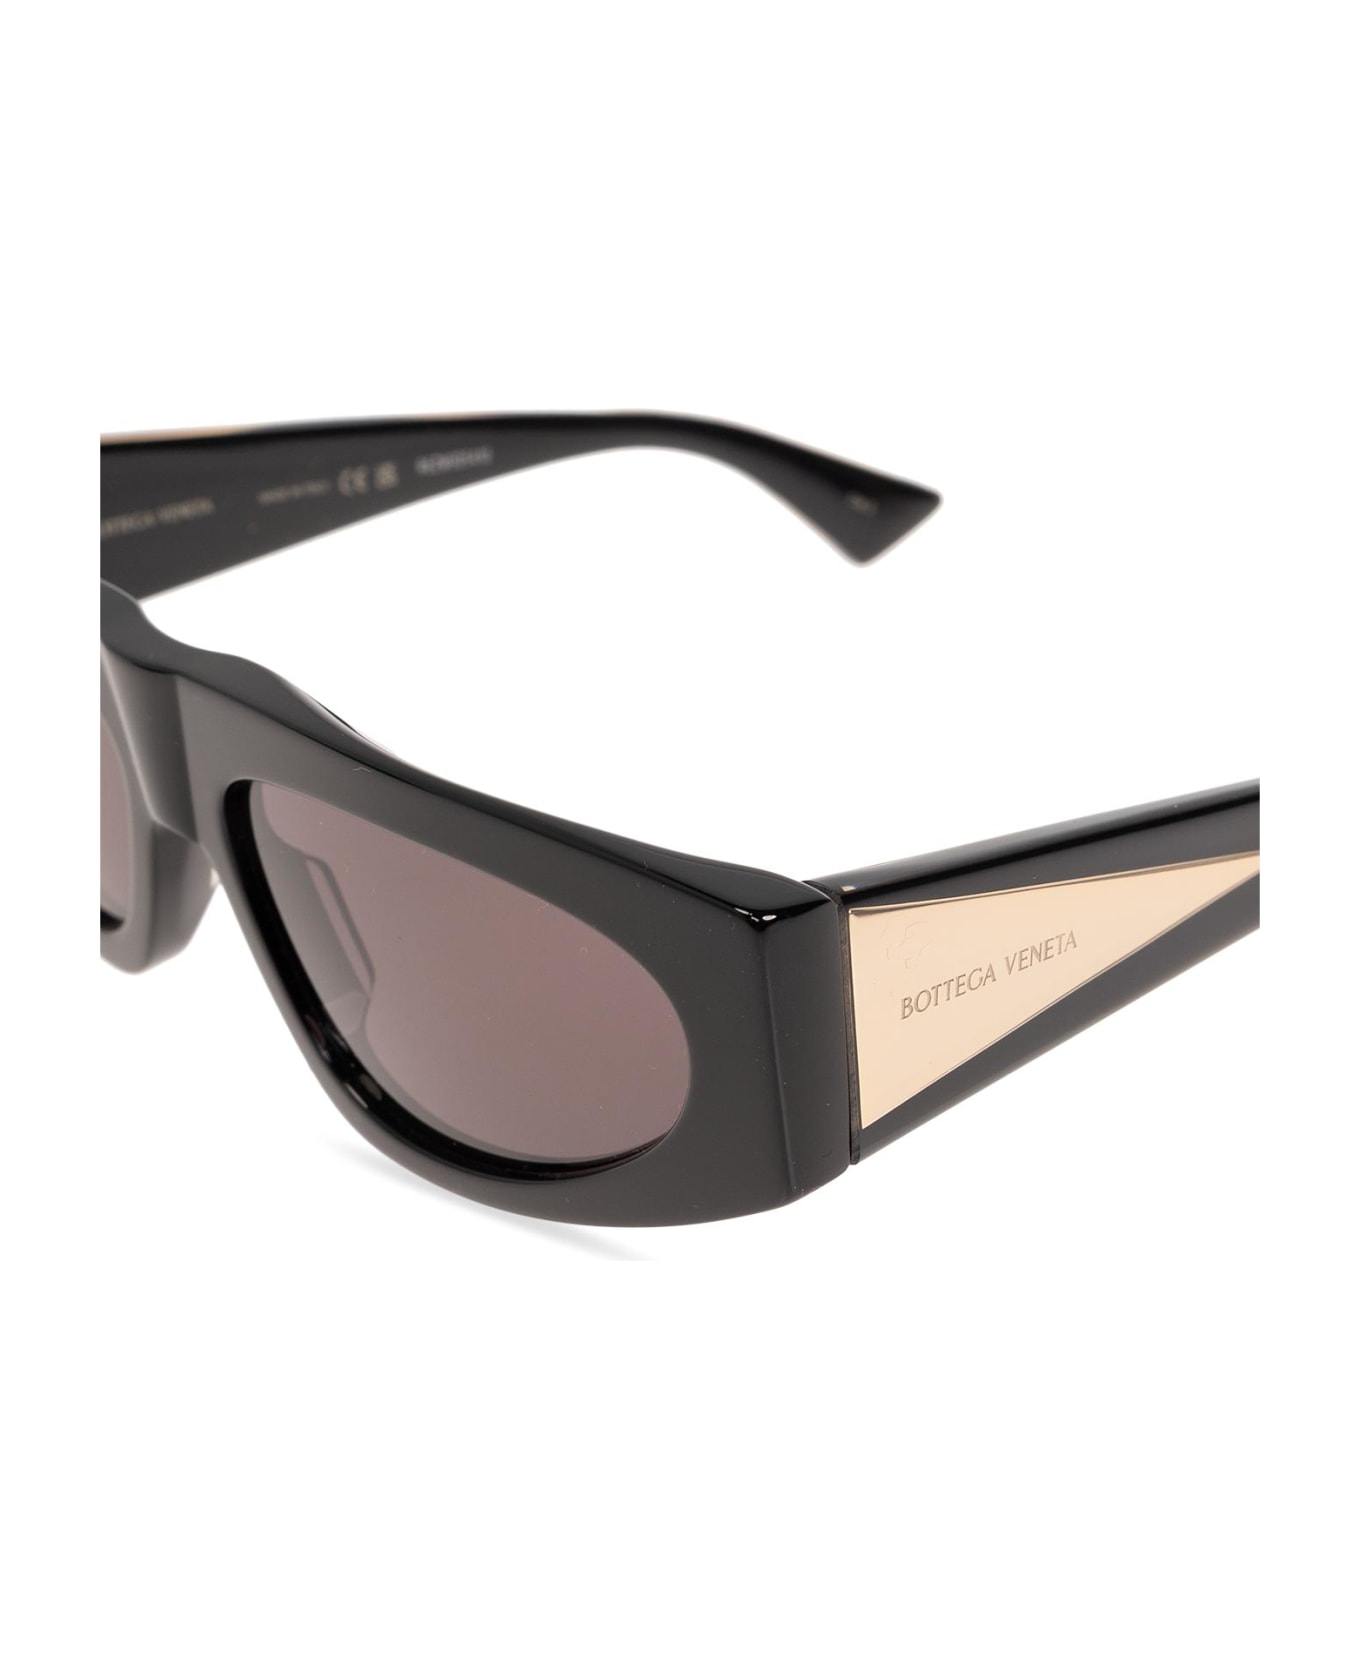 Bottega Veneta Sunglasses - Black Crystal Grey